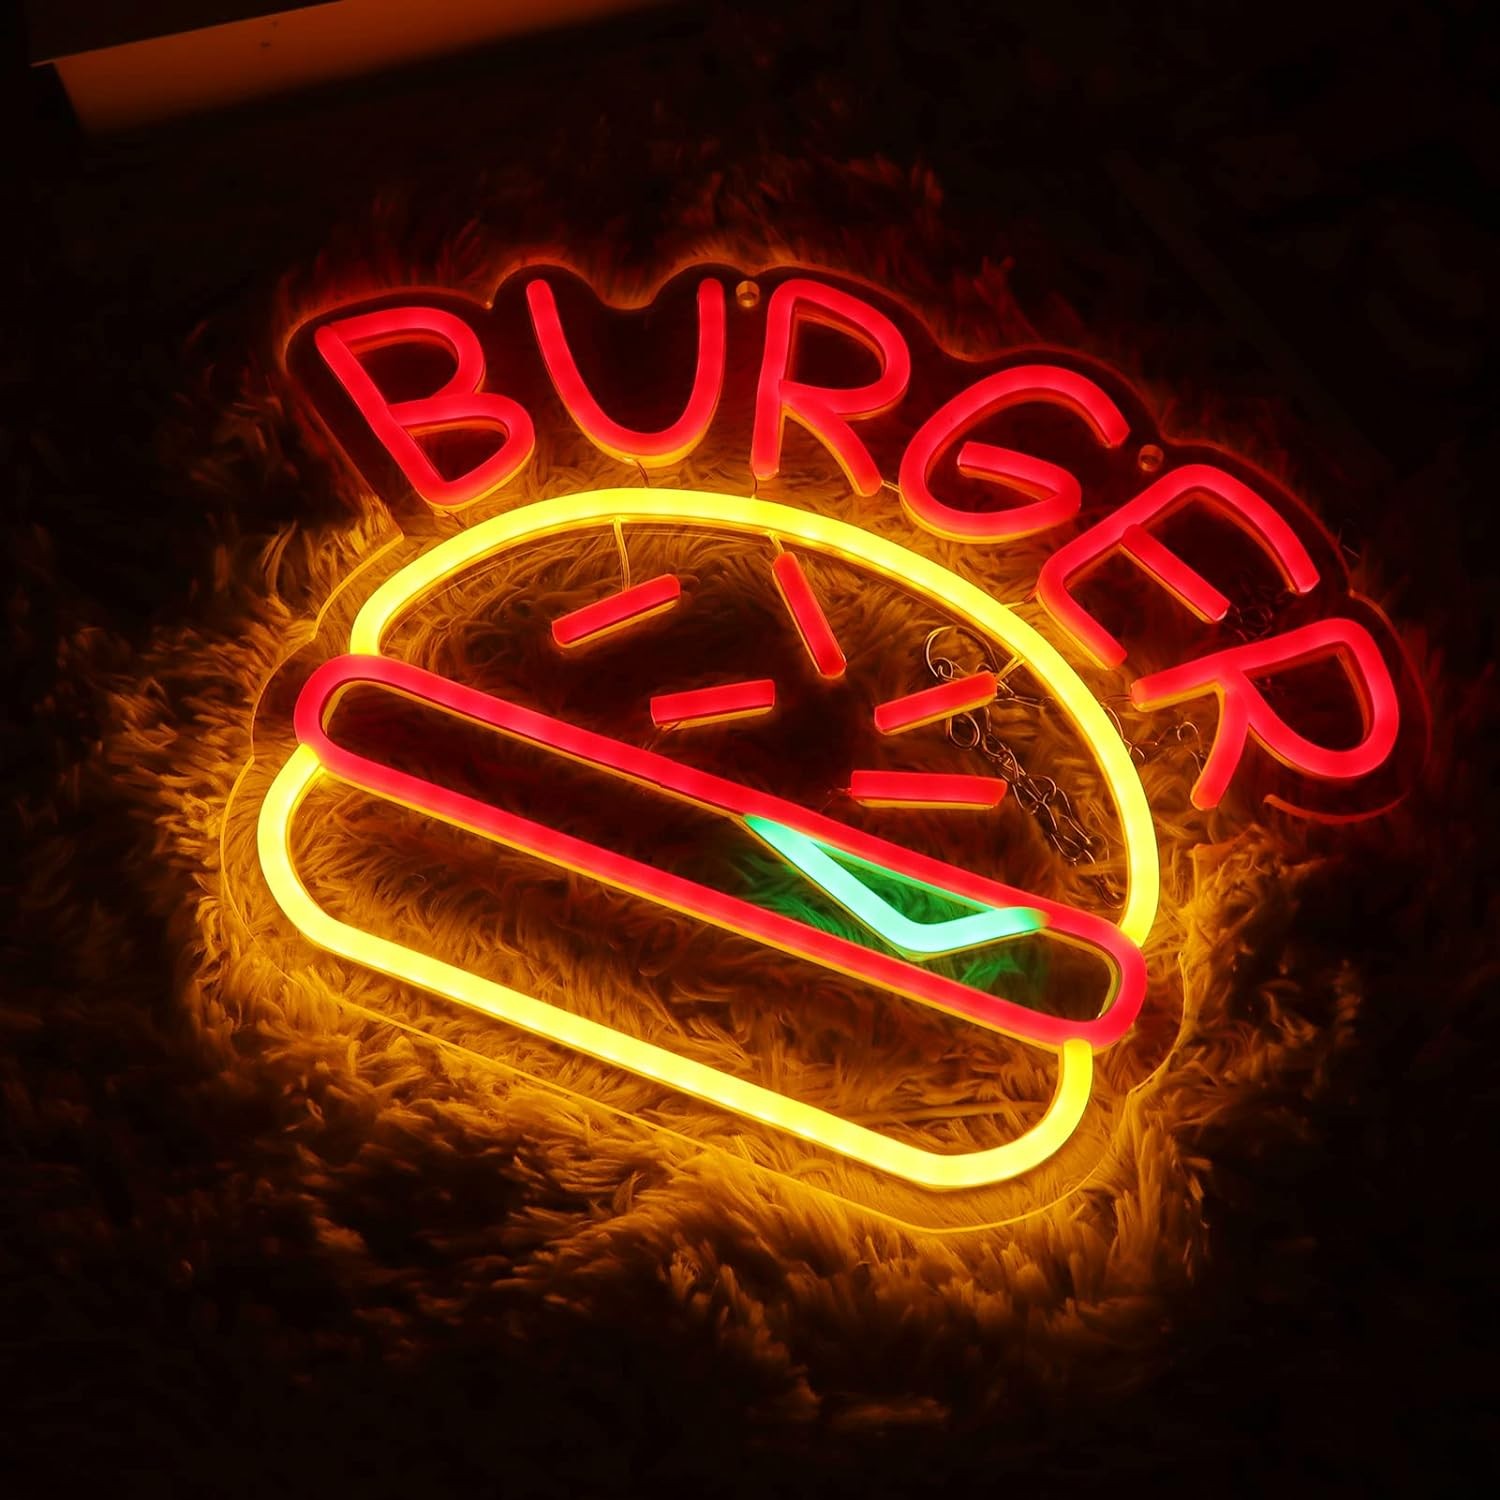 Burger Advertising svjetleći svjetleći LED neonski natpis